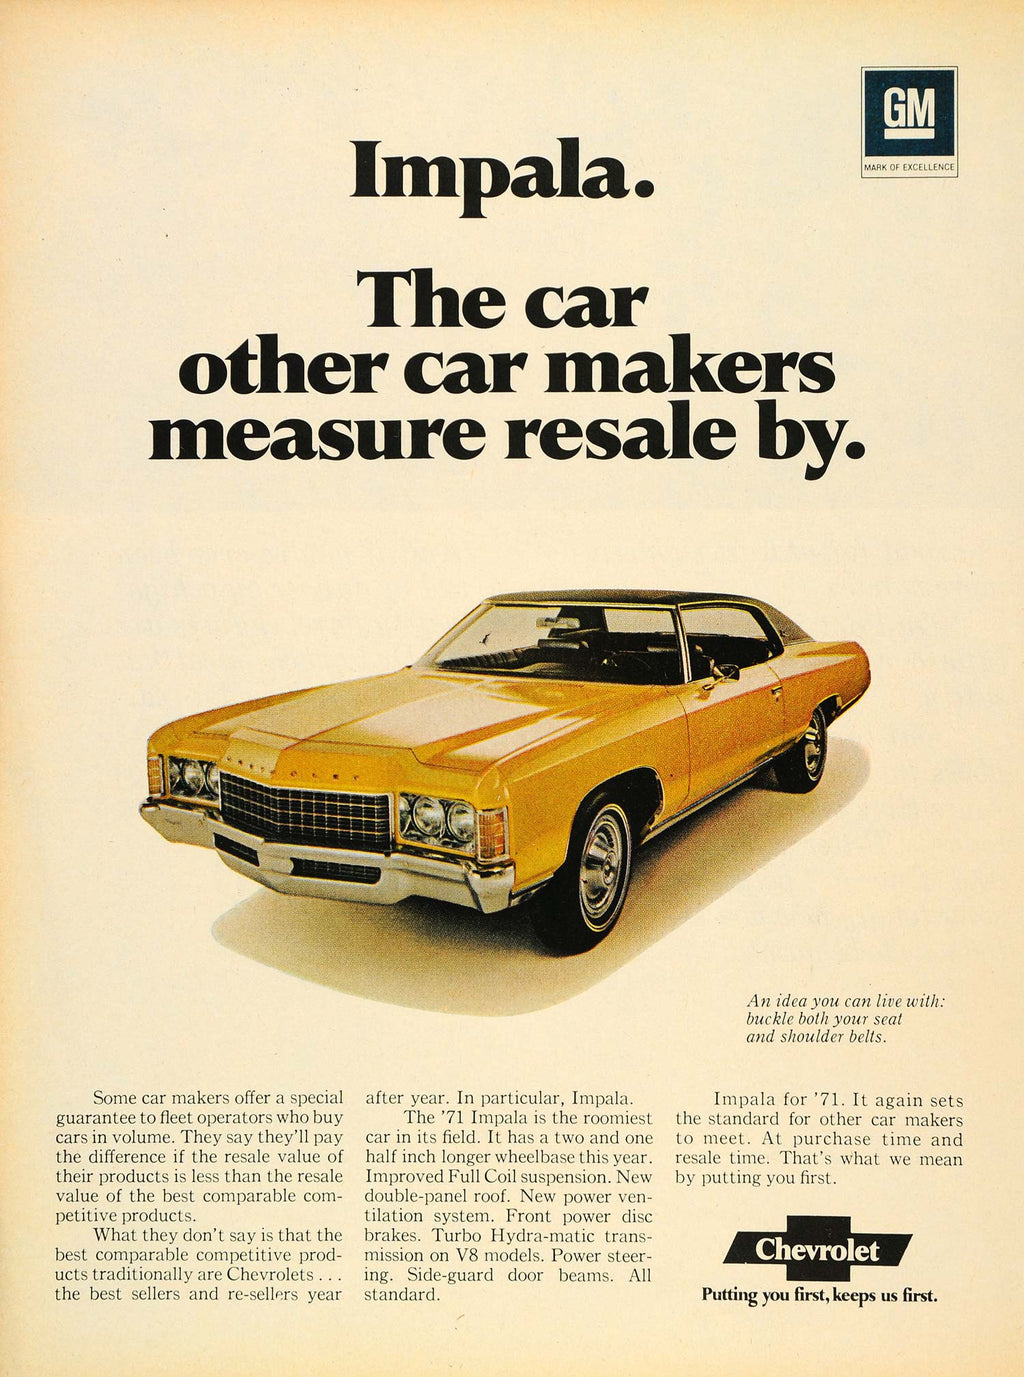 1971 Ad Yellow Chevrolet Impala Turbo Hydra-matic V8 - ORIGINAL CARS7 - Period Paper
